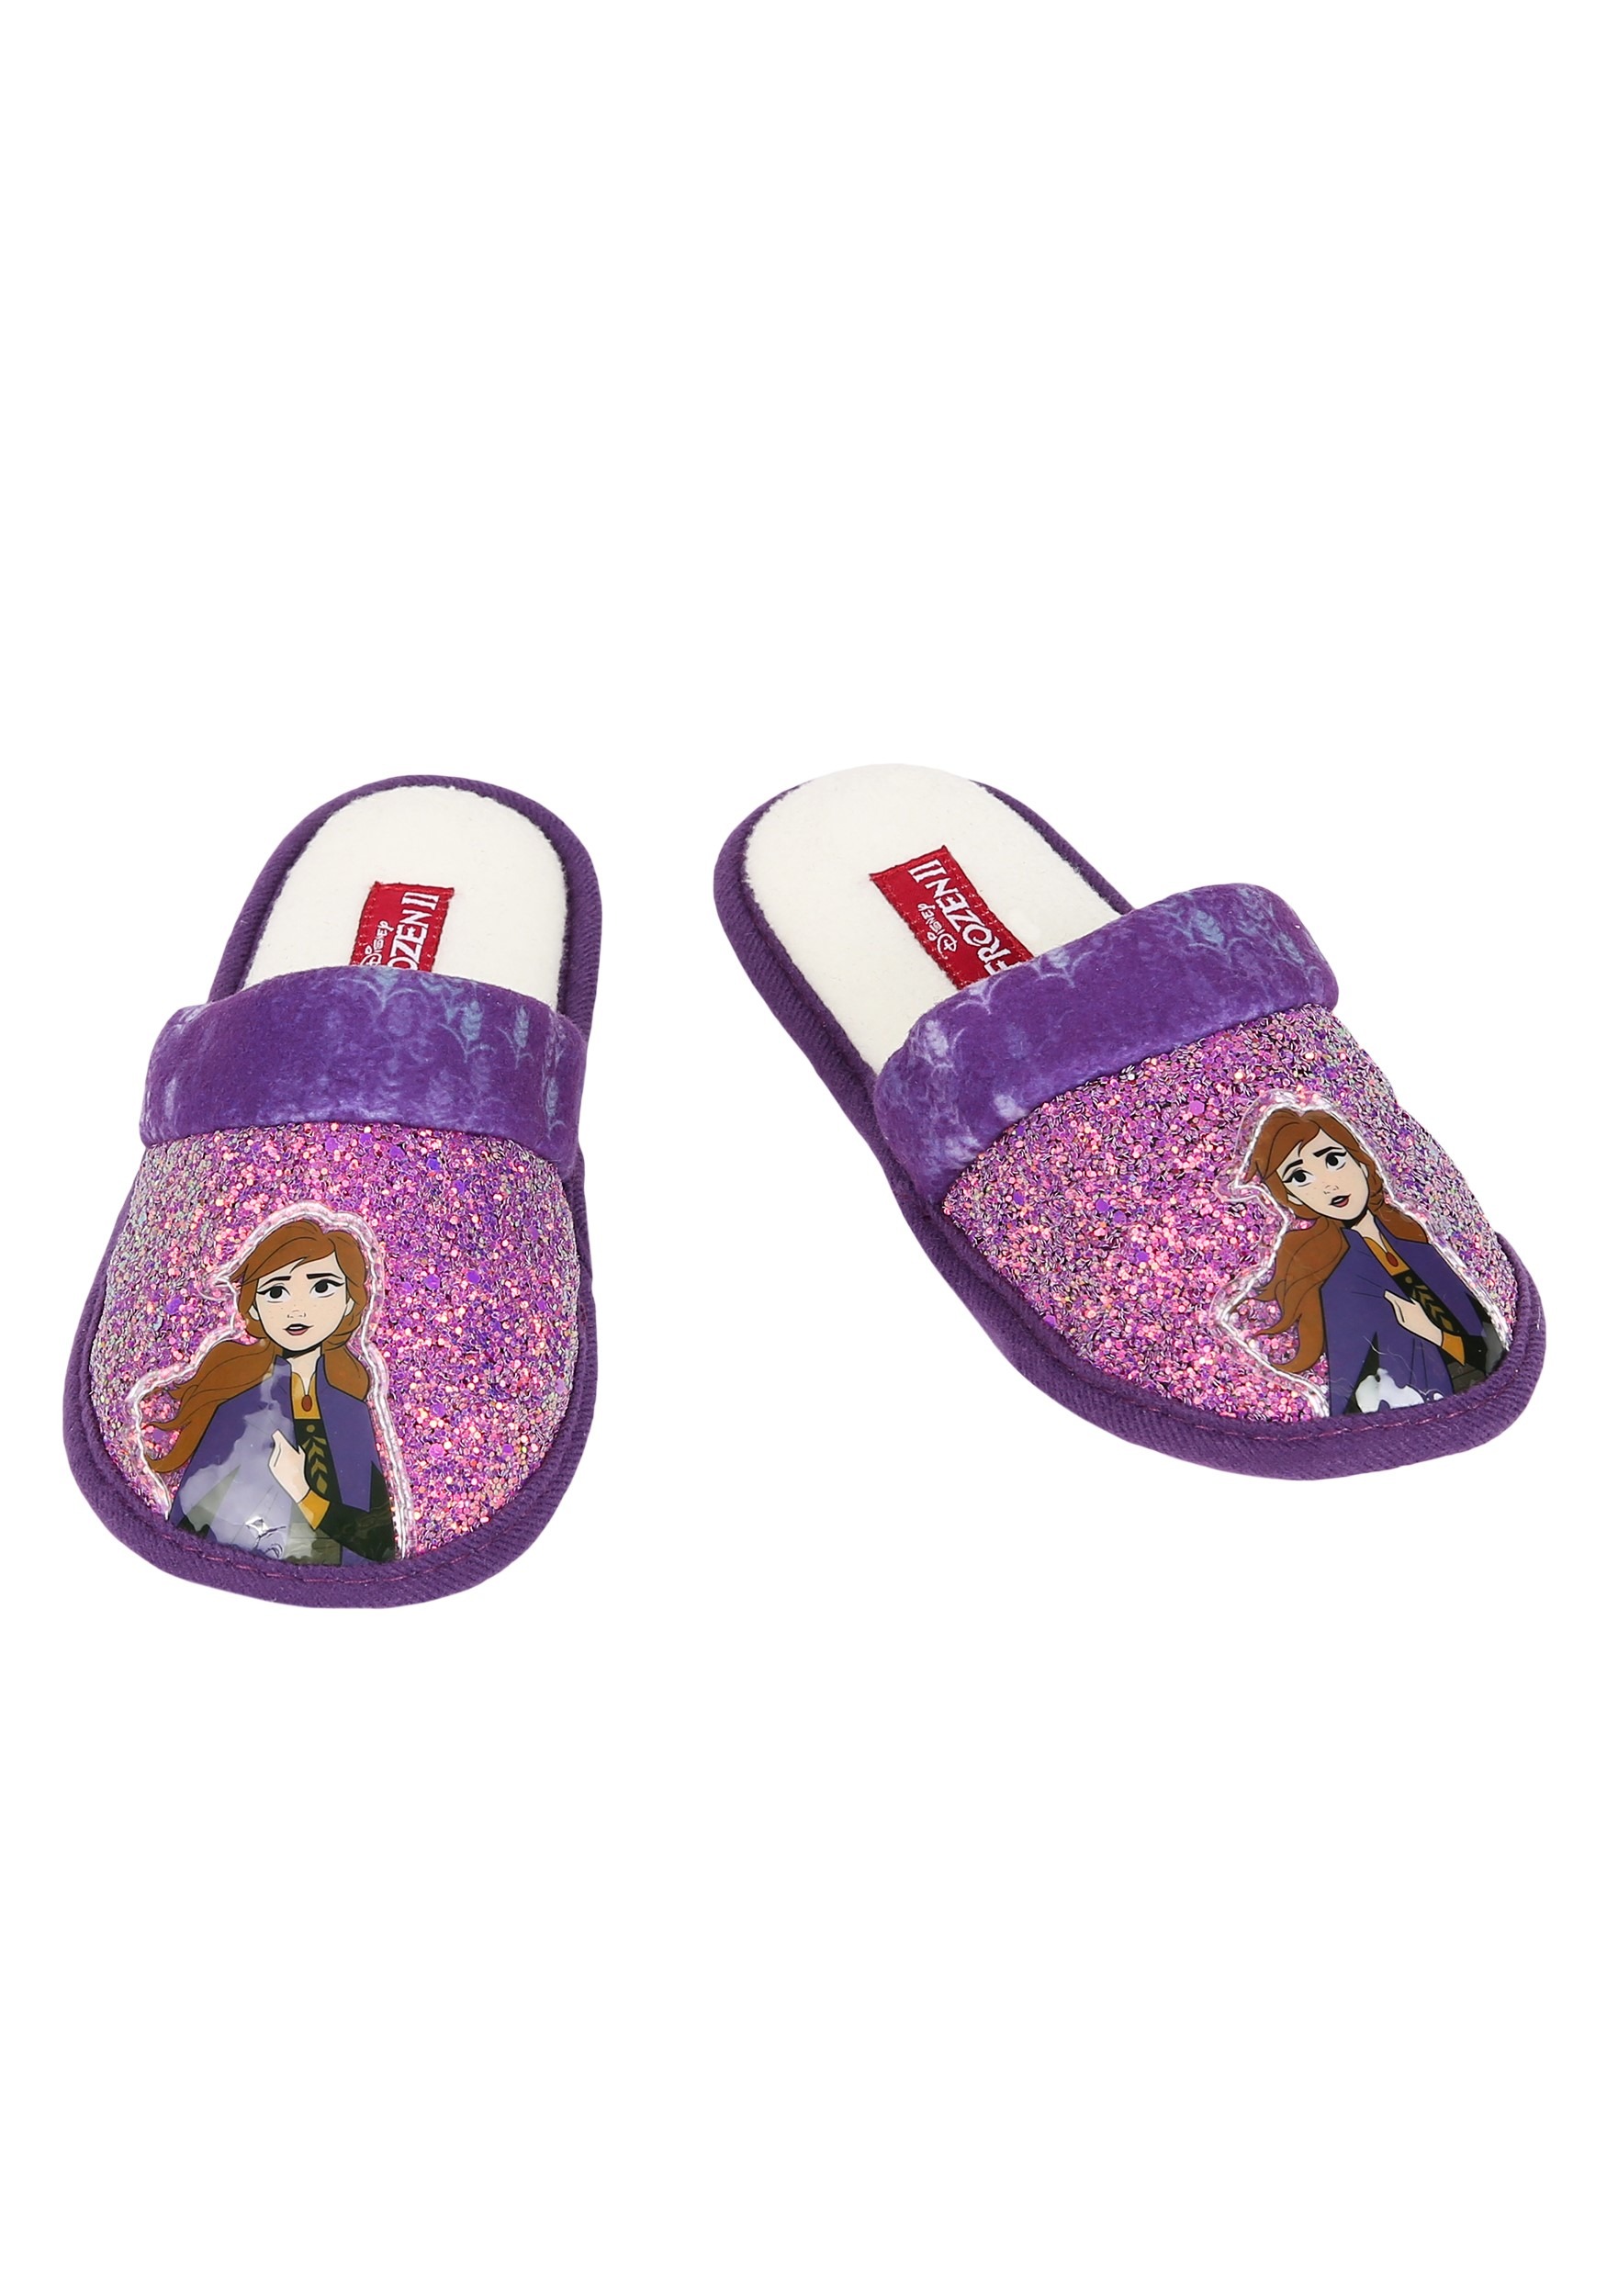 Parallel Import/Generic Product Joah Store Elsa Anna Girls Pink Warm Comfort Indoor Slipper